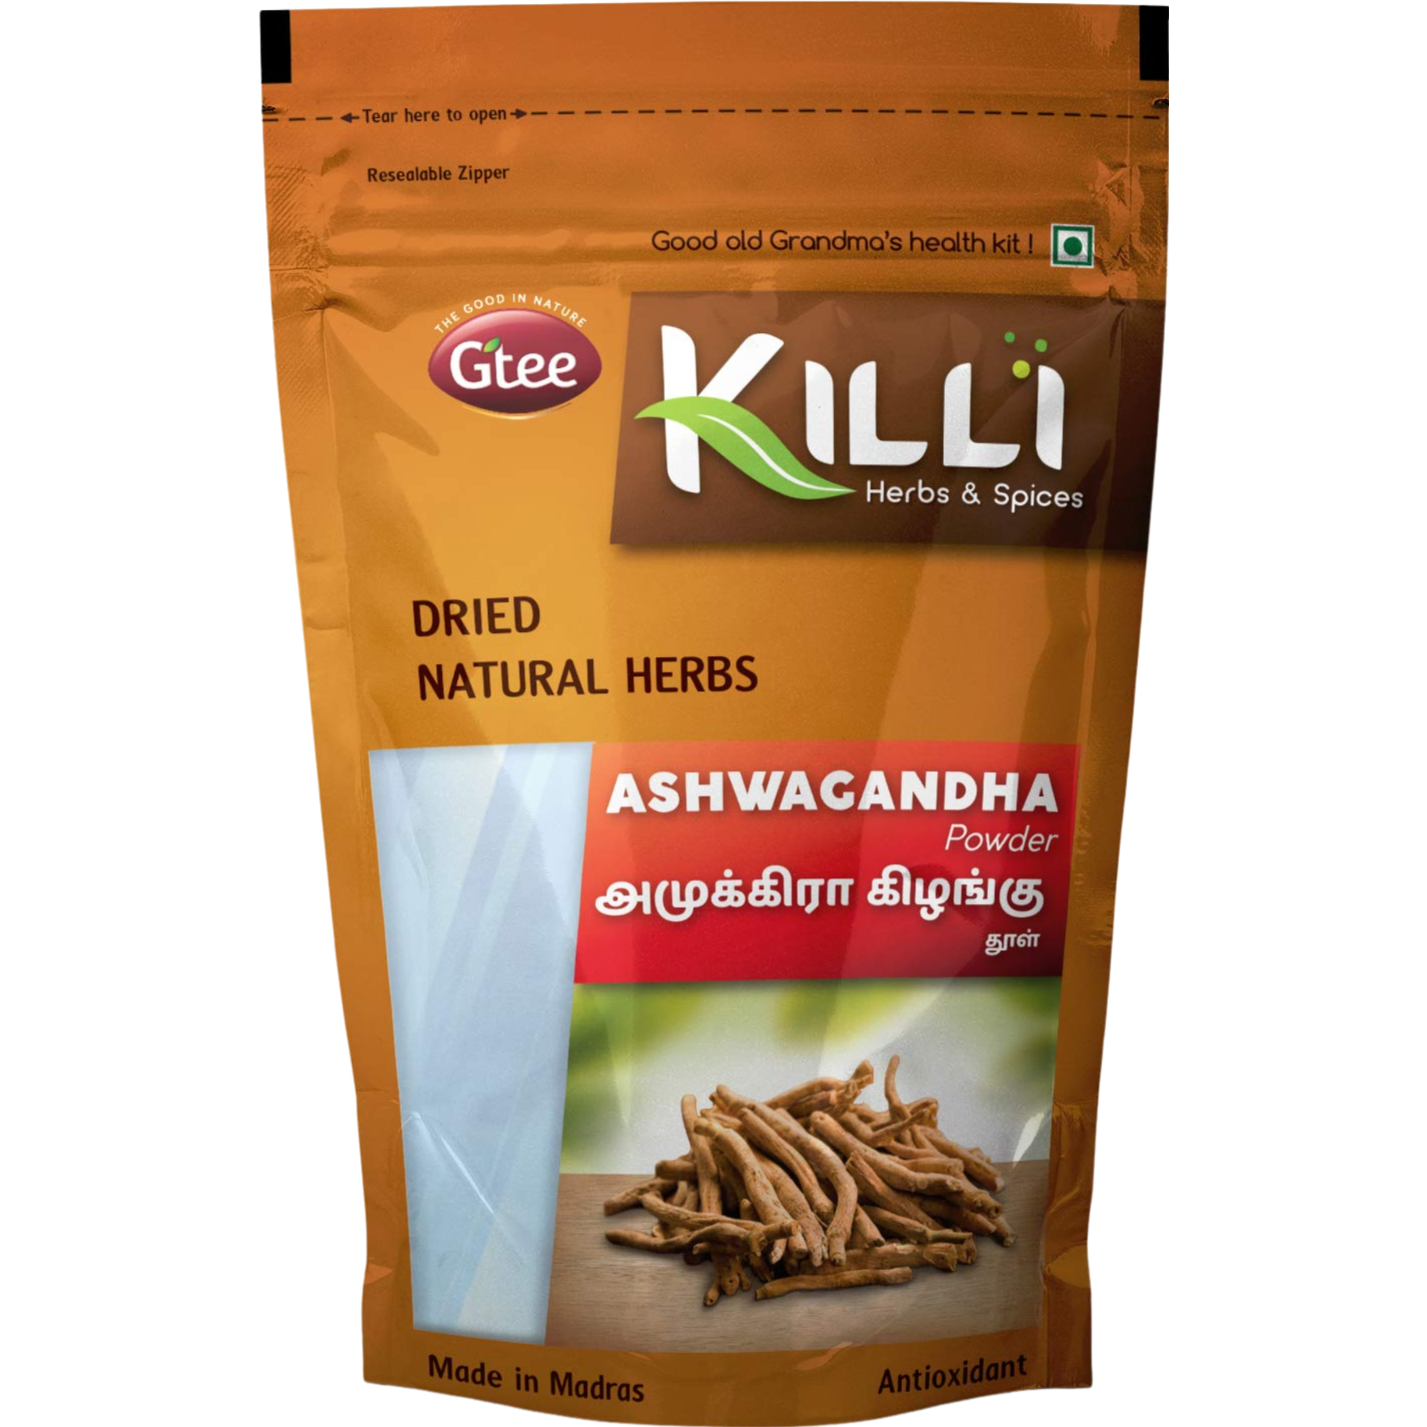 Case of 1 - Gtee Killi Ashwagandha Powder Natural Herb - 100 Gm (3.5 Oz)